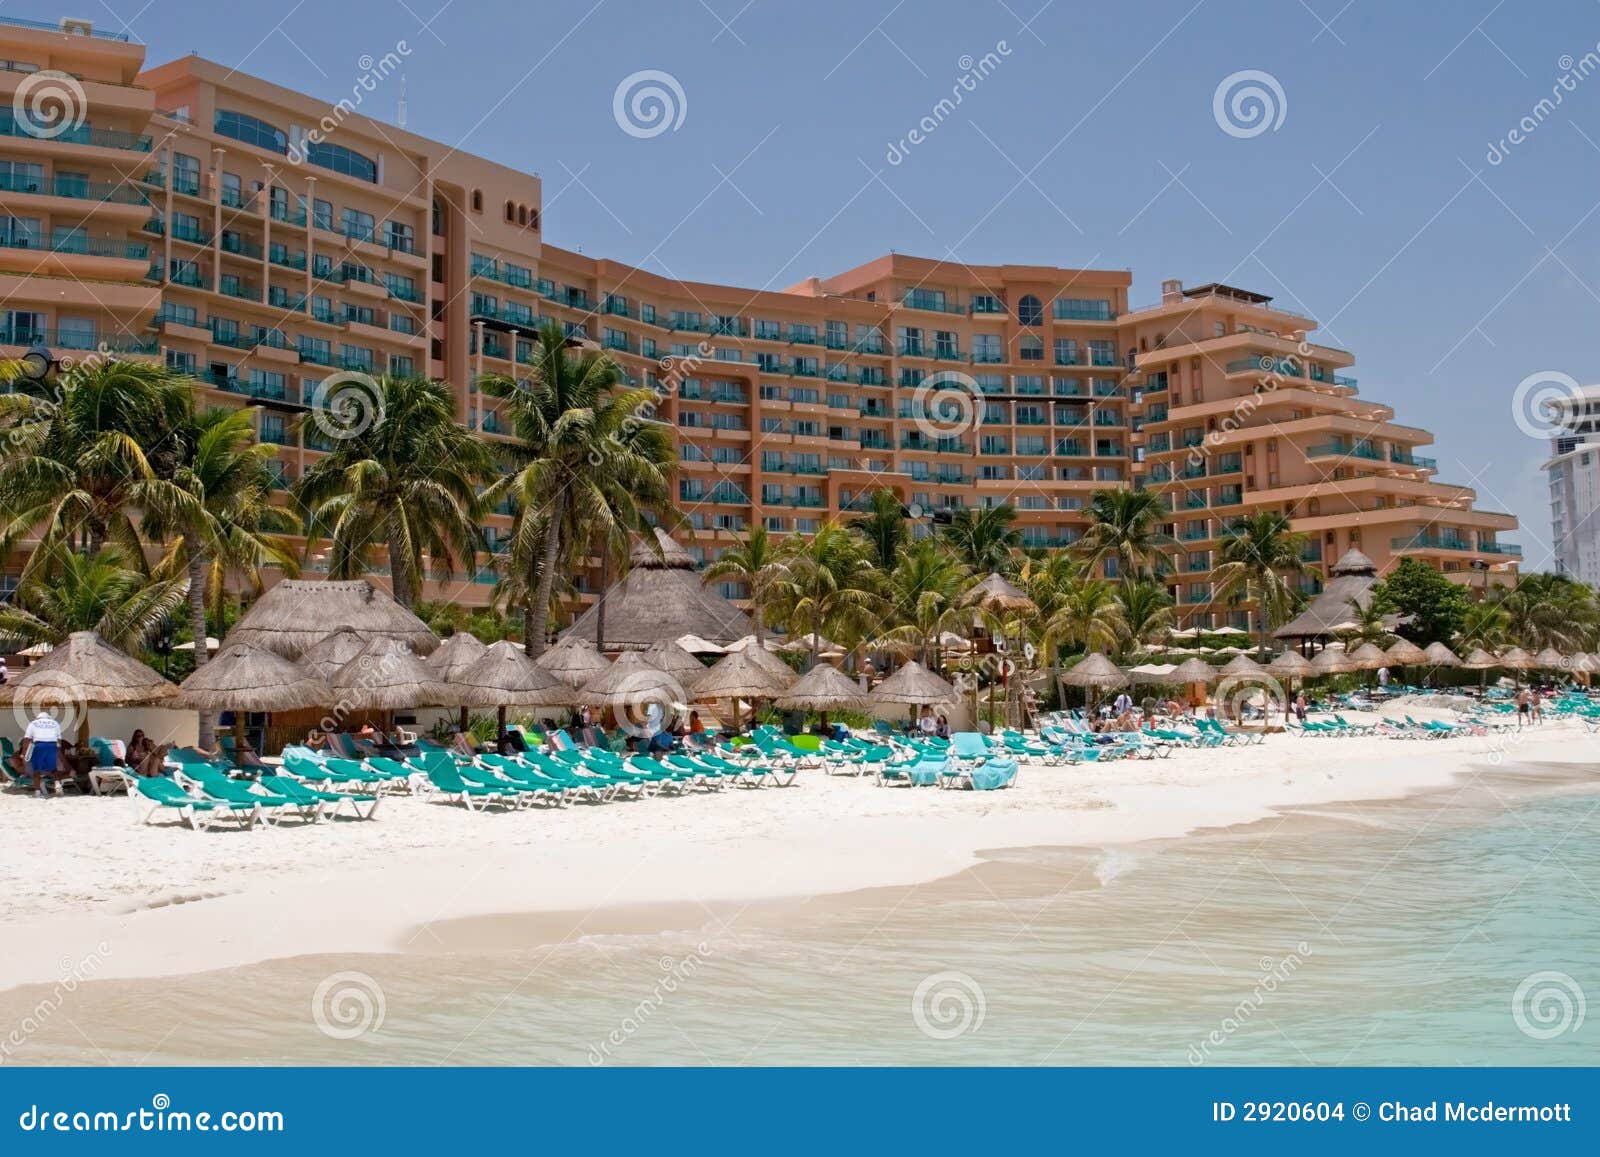 caribbean resort hotel